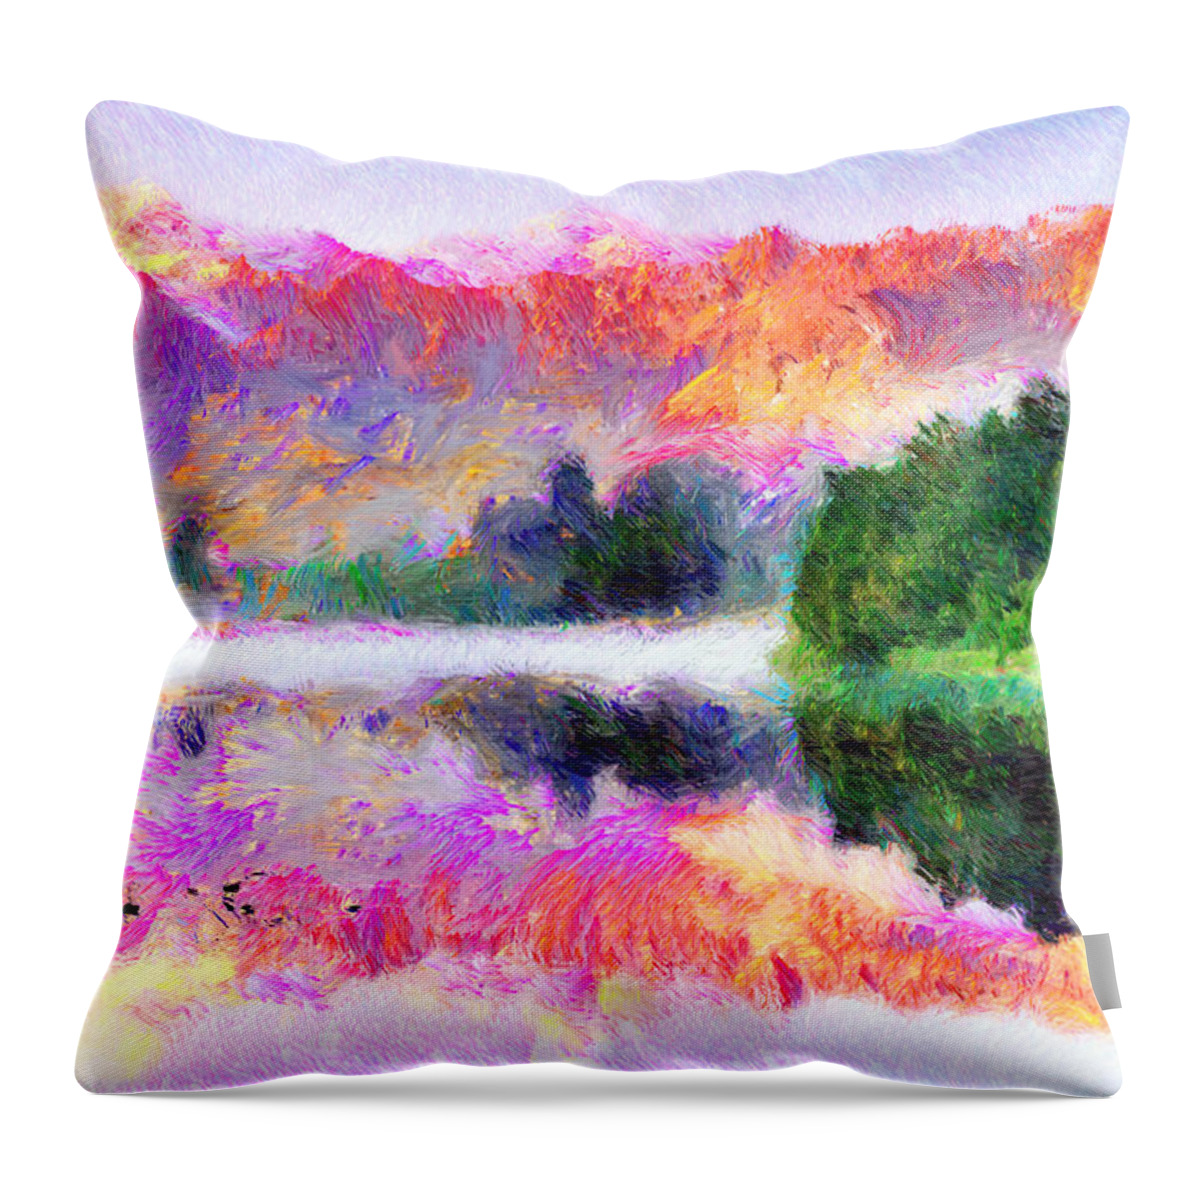 Rafael Salazar Throw Pillow featuring the mixed media Abstract Landscape 0743 by Rafael Salazar